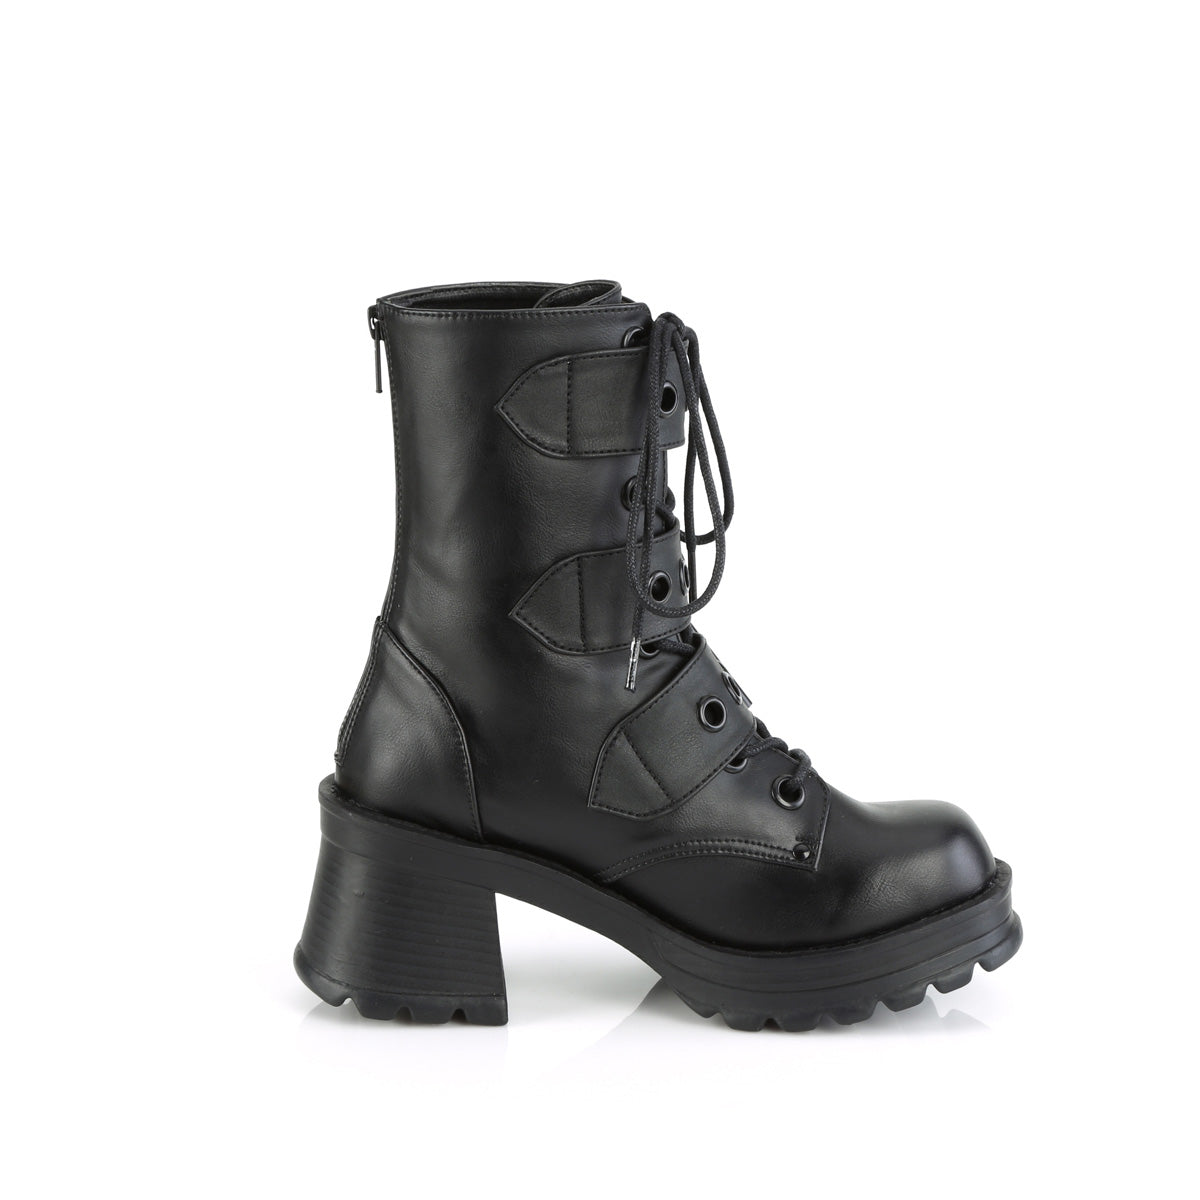 BRATTY-118 Demonia Black Vegan Leather Women's Ankle Boots [Demonia Cult Alternative Footwear]